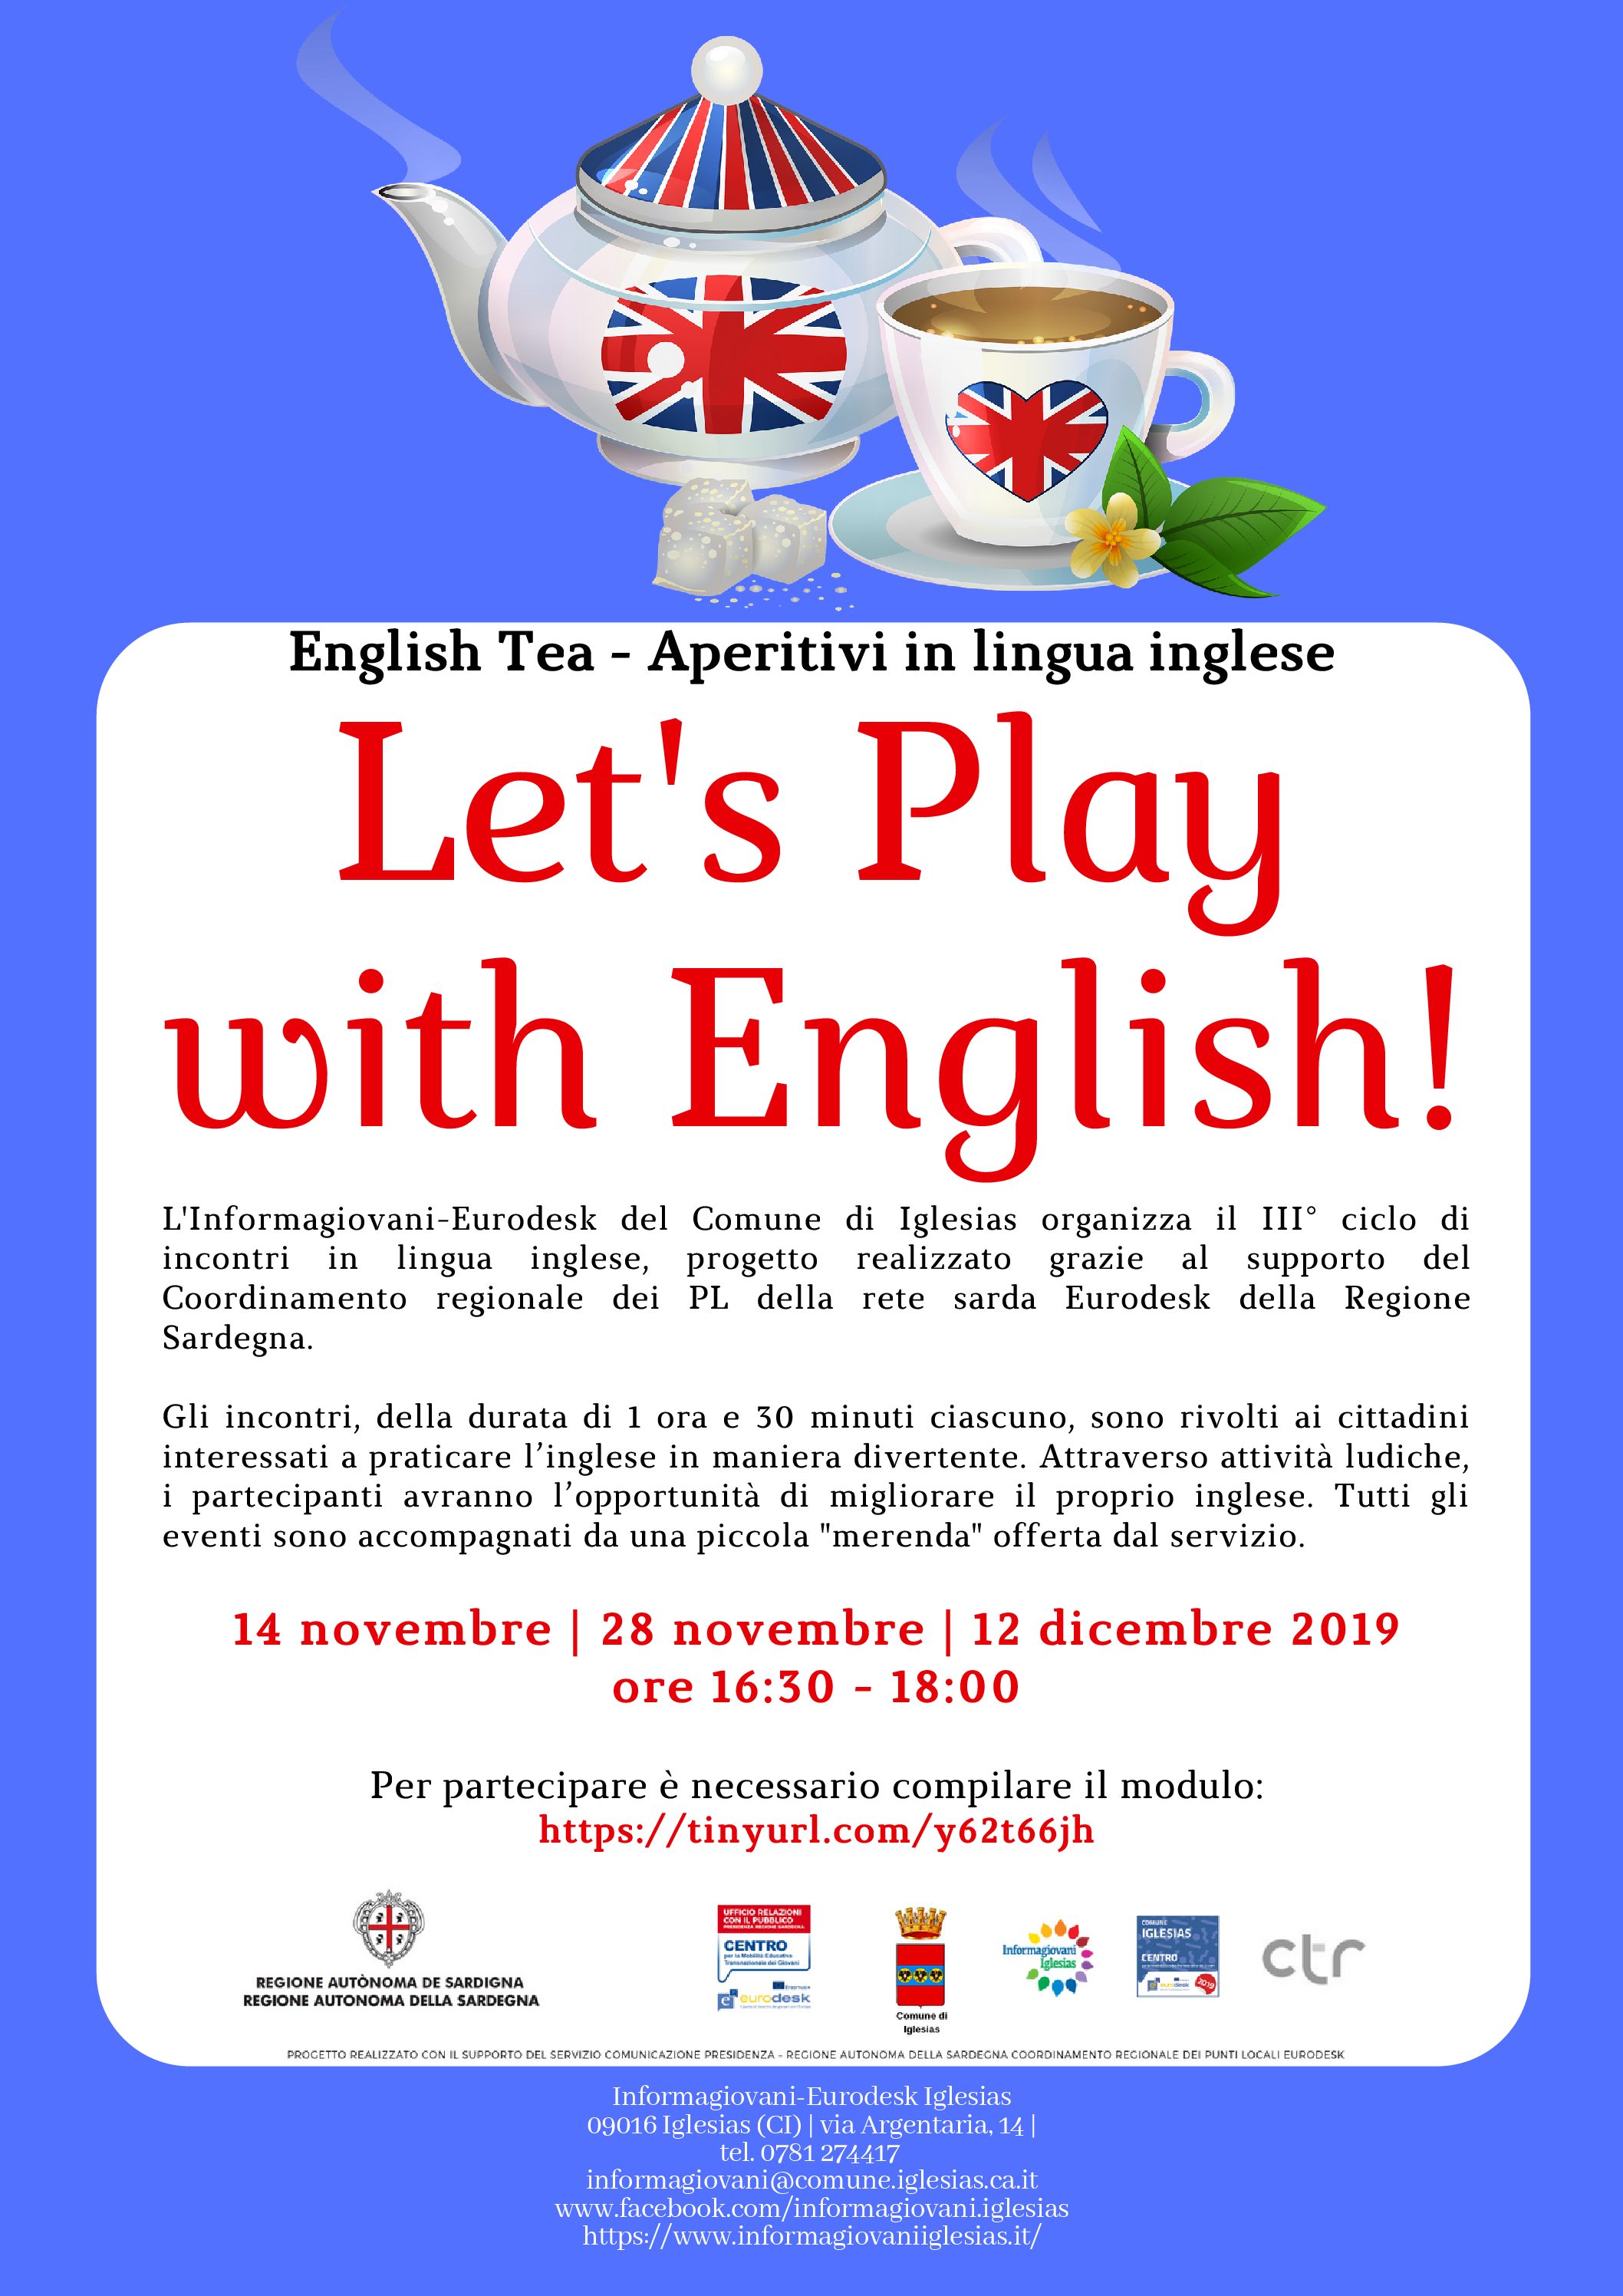 English Tea – Let’s Play with English!